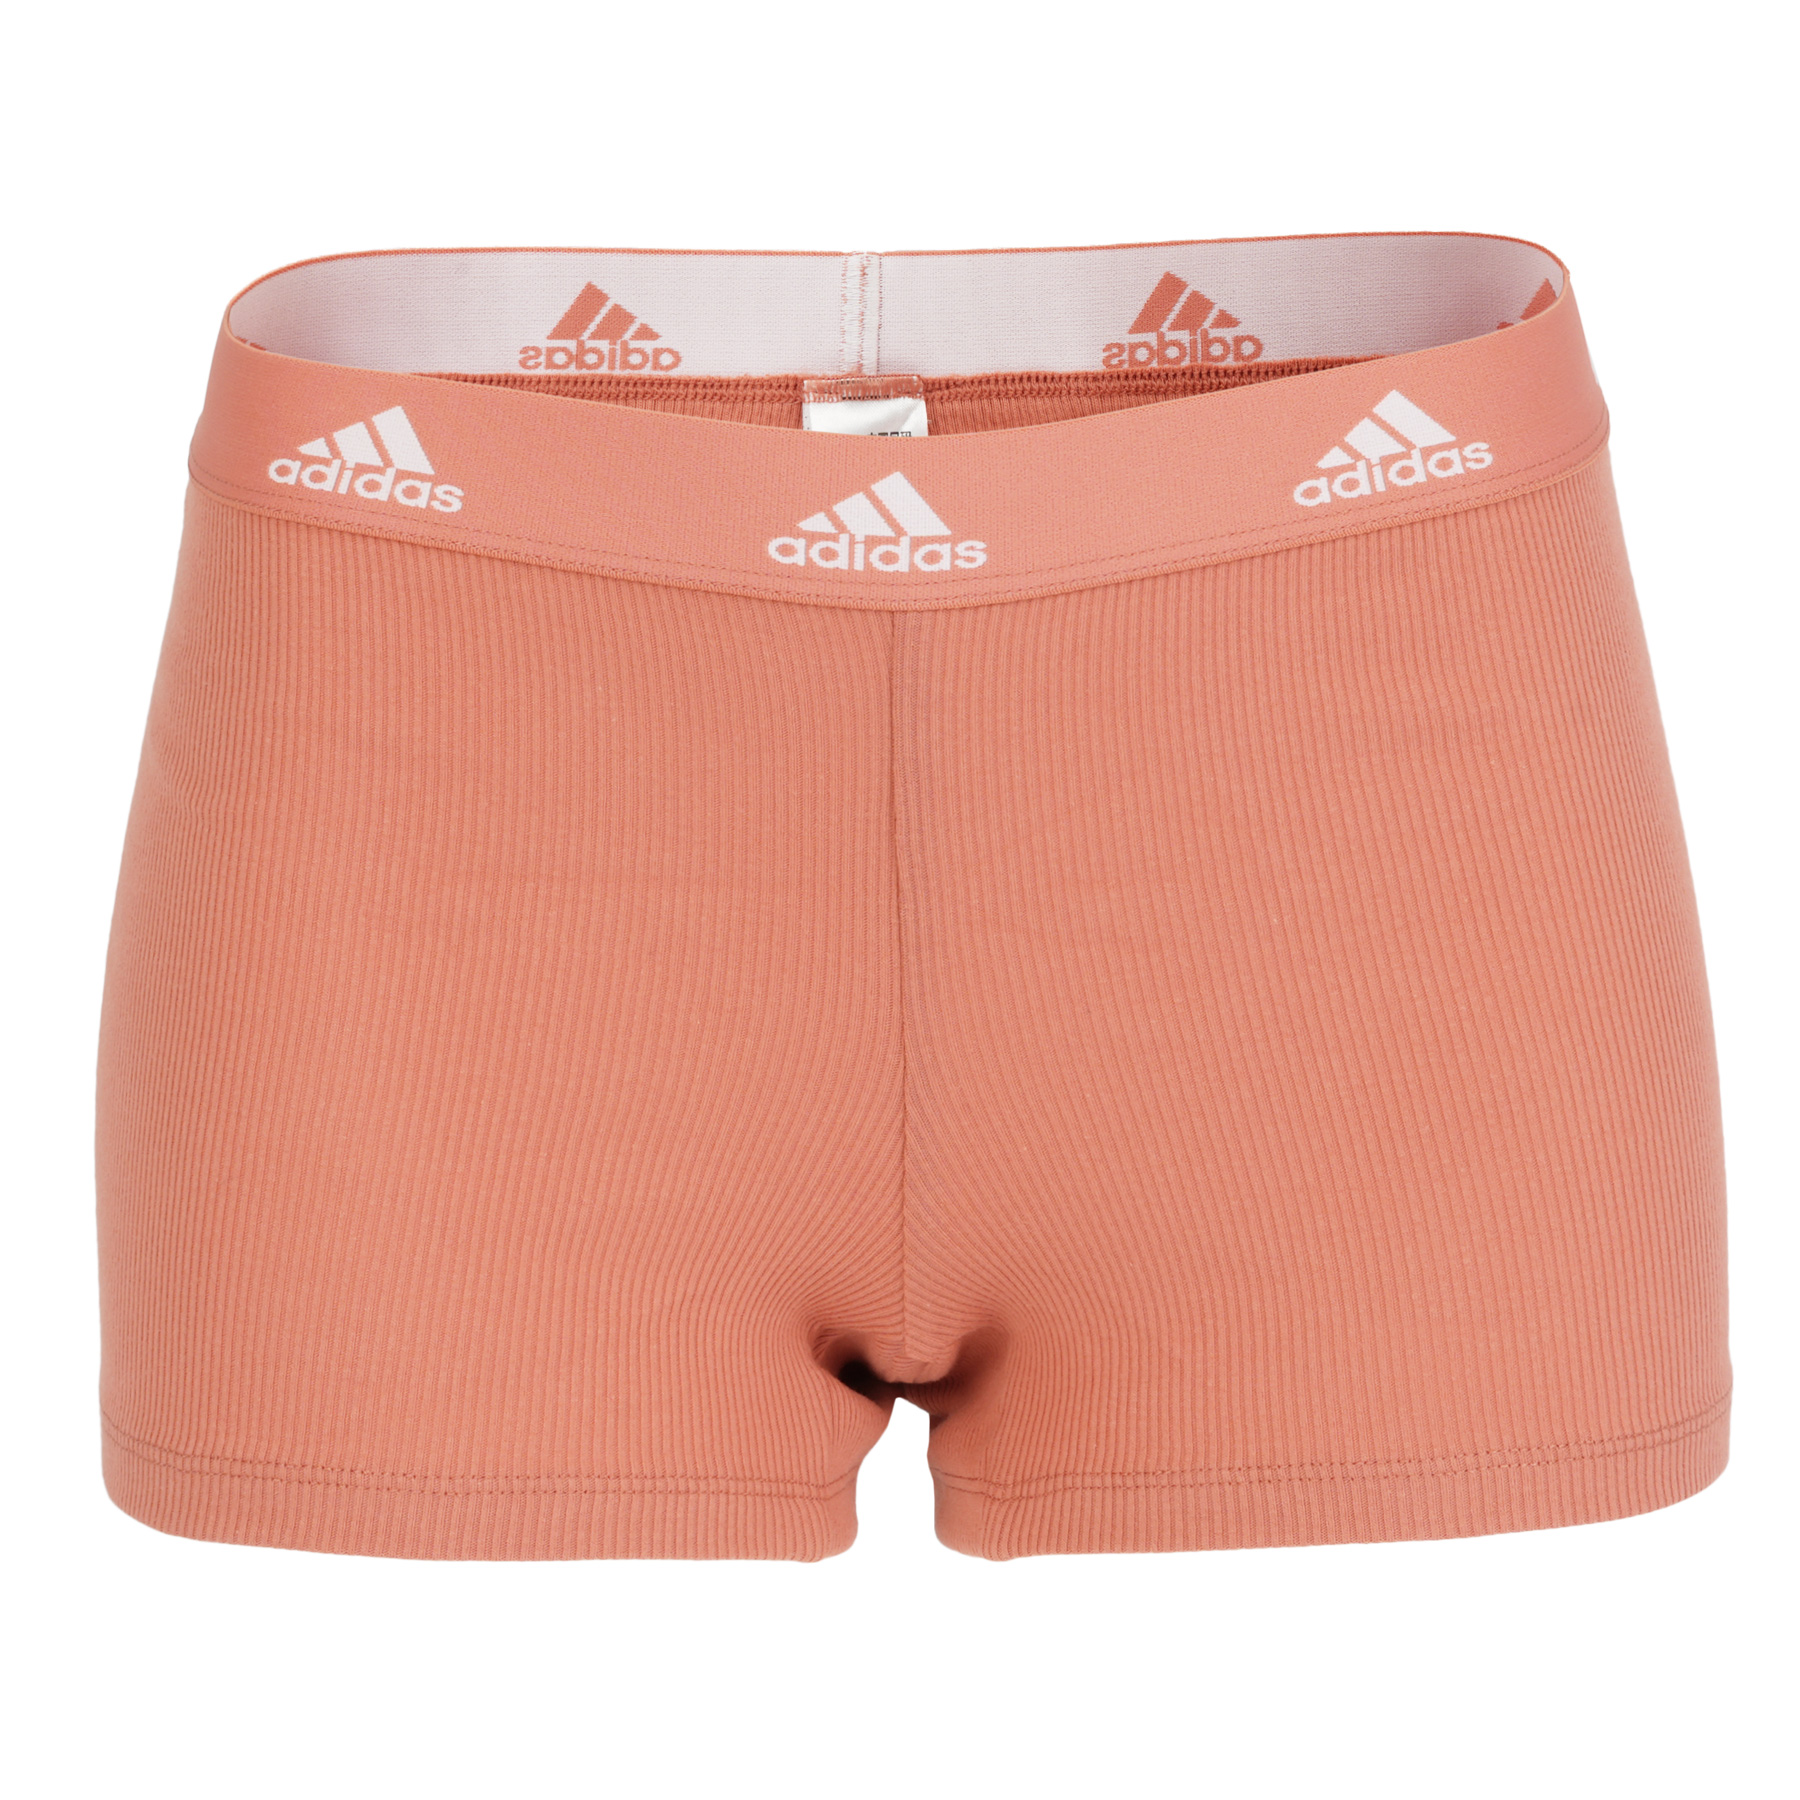 Picture of adidas Sports Underwear Rib 2x2 Cotton  Boxer Shorts Women - 523 - wonder clay